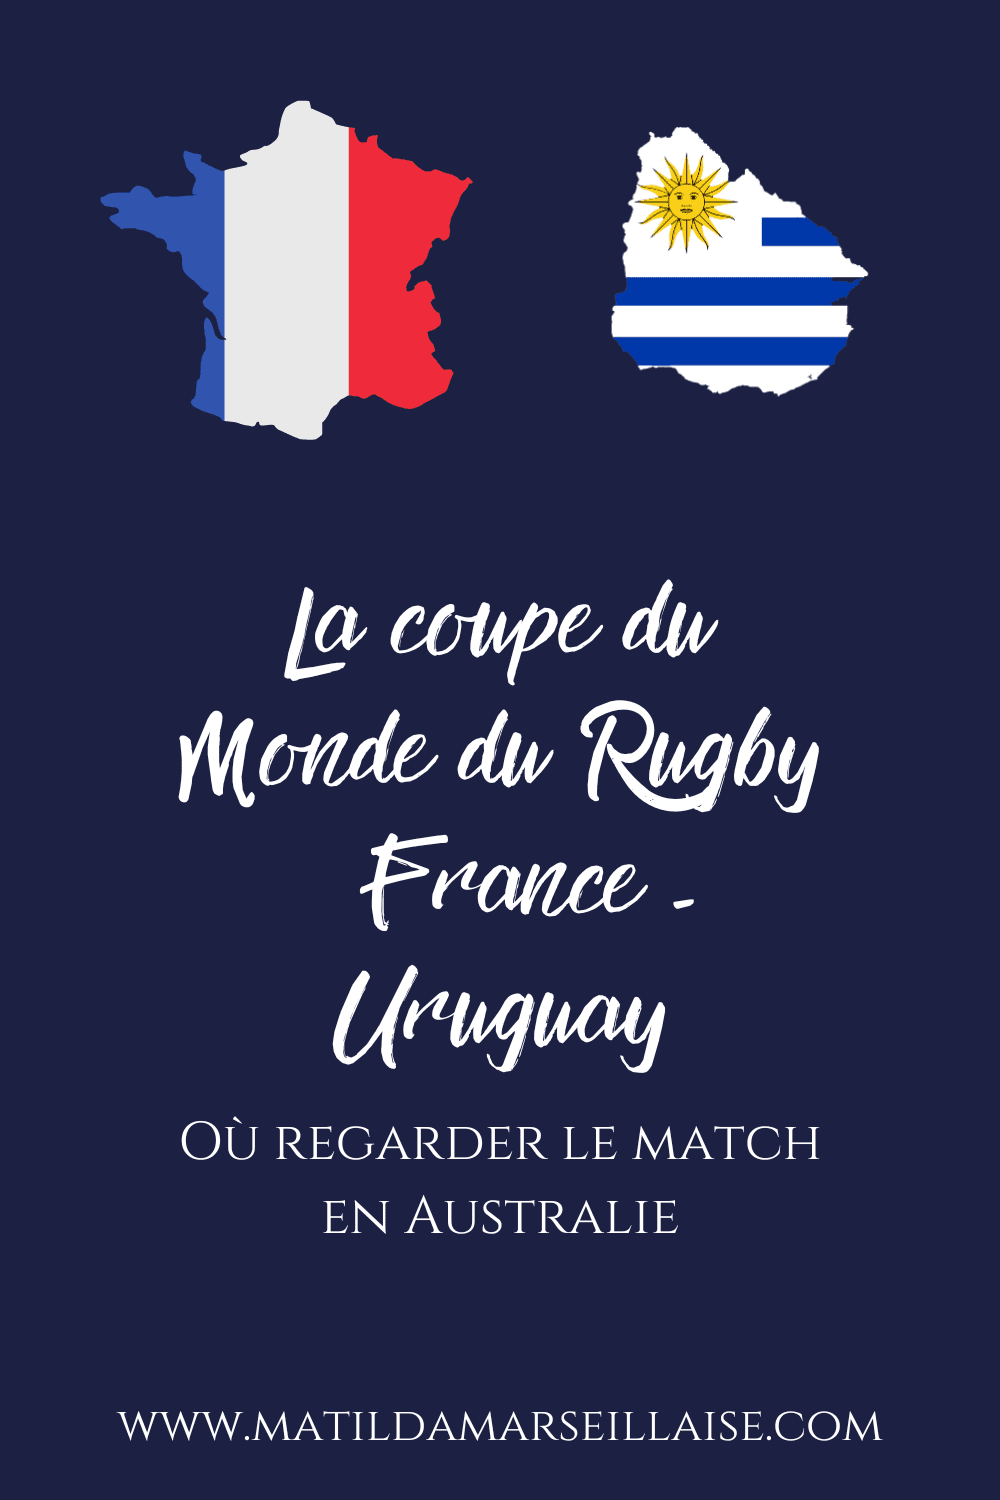 France - Uruguay en Australie